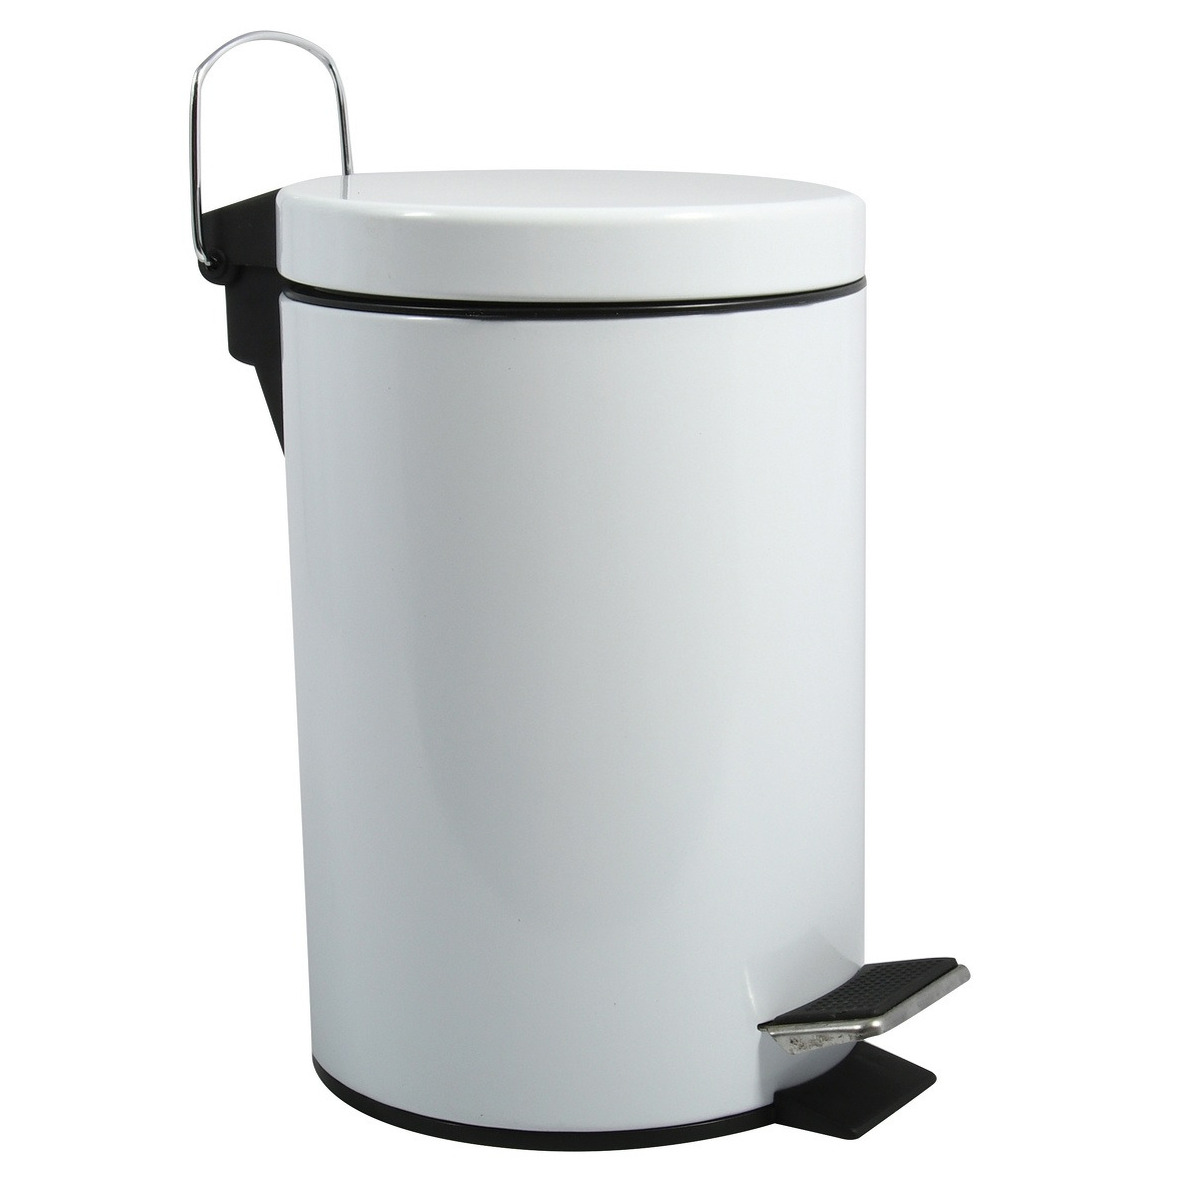 Prullenbak-pedaalemmer metaal wit 5 liter 20 x 28 cm Badkamer-toilet